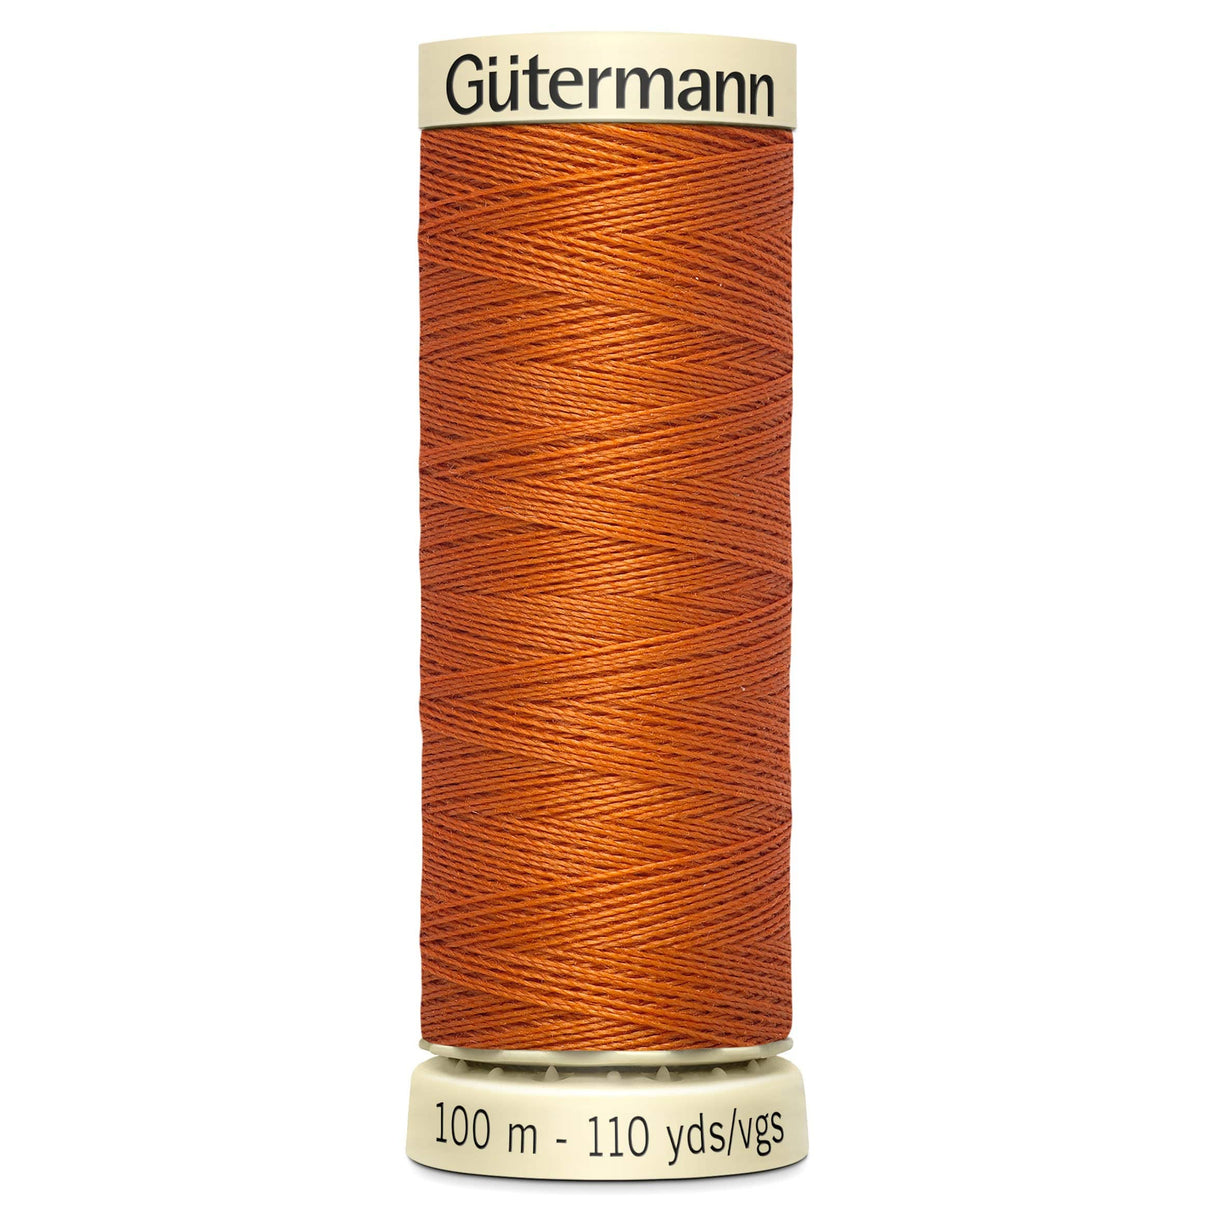 Groves Haberdashery 982 Gutermann Thread Sewing Cotton 100 m Black to Pink